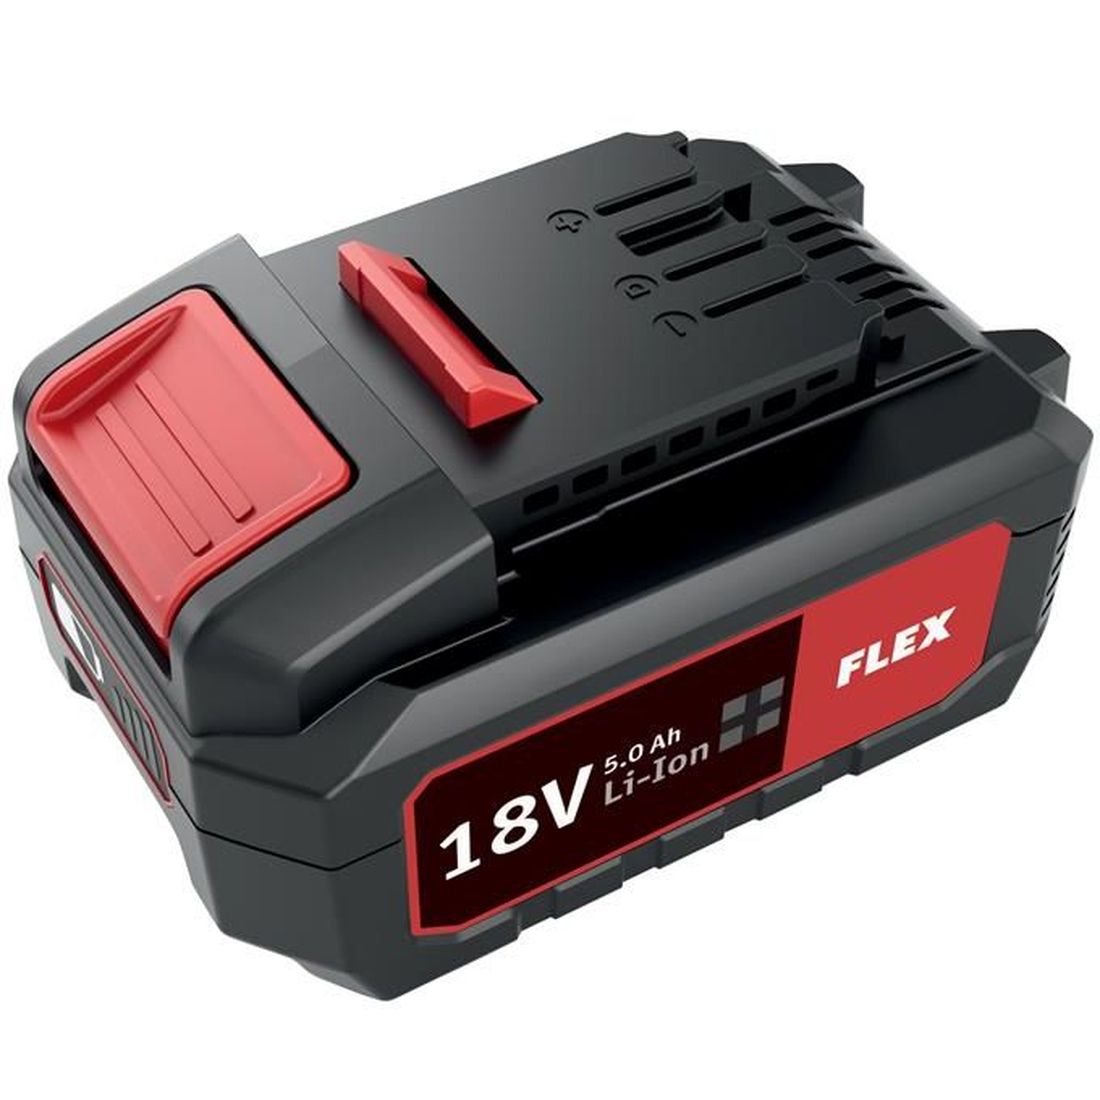 FLEX AP 18.0/5.0 Battery Pack 18V 5.0Ah Li-ion                                       